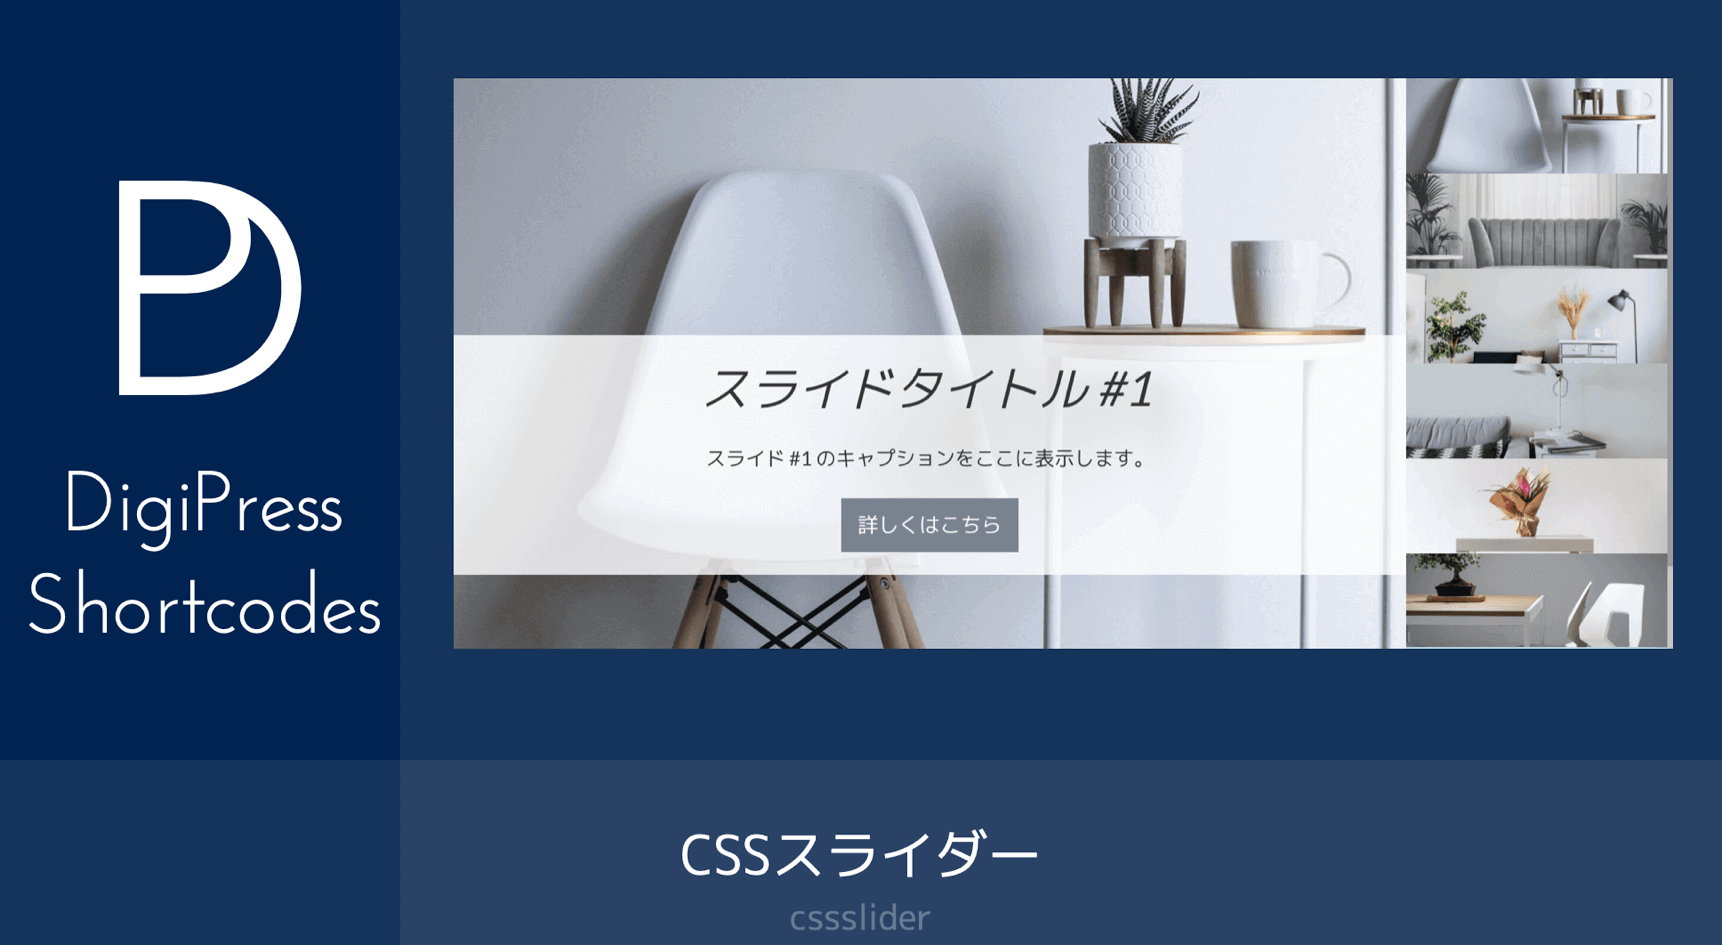 cssslider : CSSのみで動作する超軽量なサムネイル付きスライダー